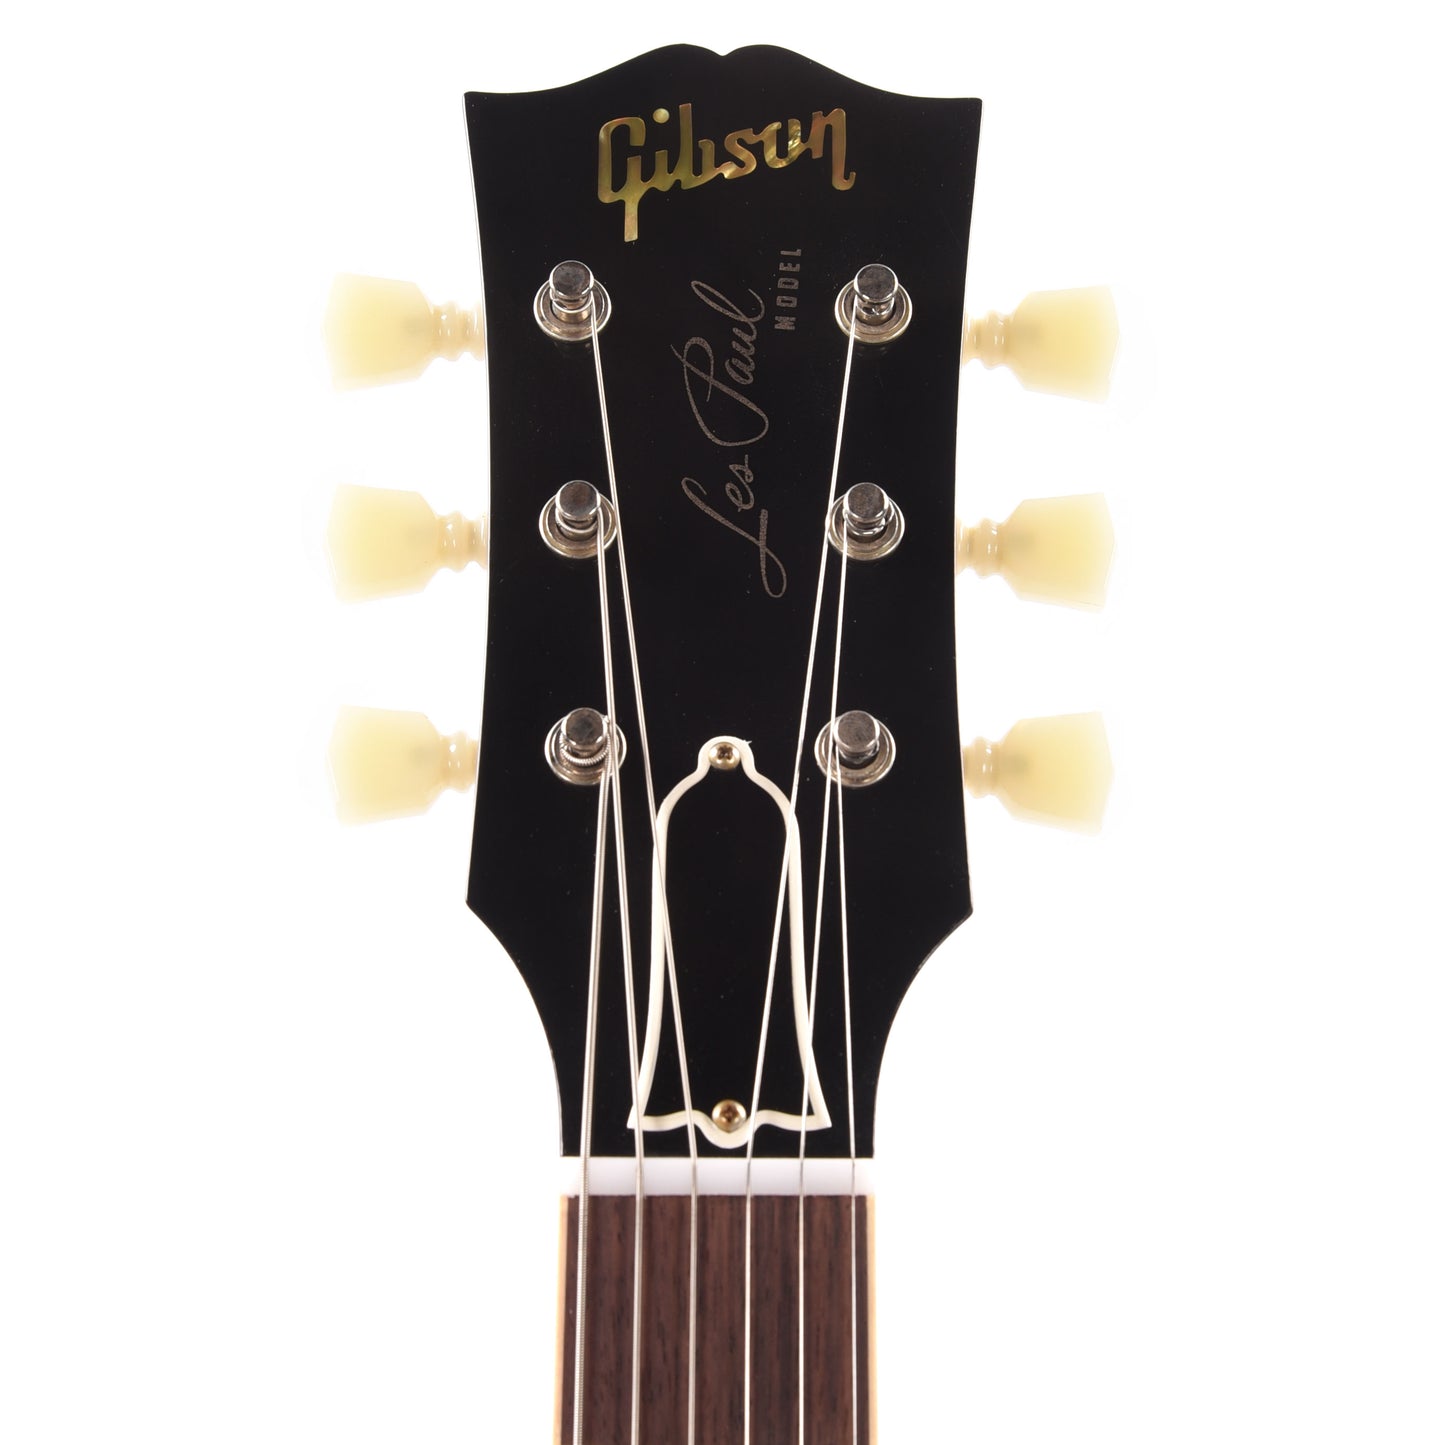 Gibson Custom Shop 1960 Les Paul Standard "CME Spec" Factory Burst VOS w/Scarface Neck